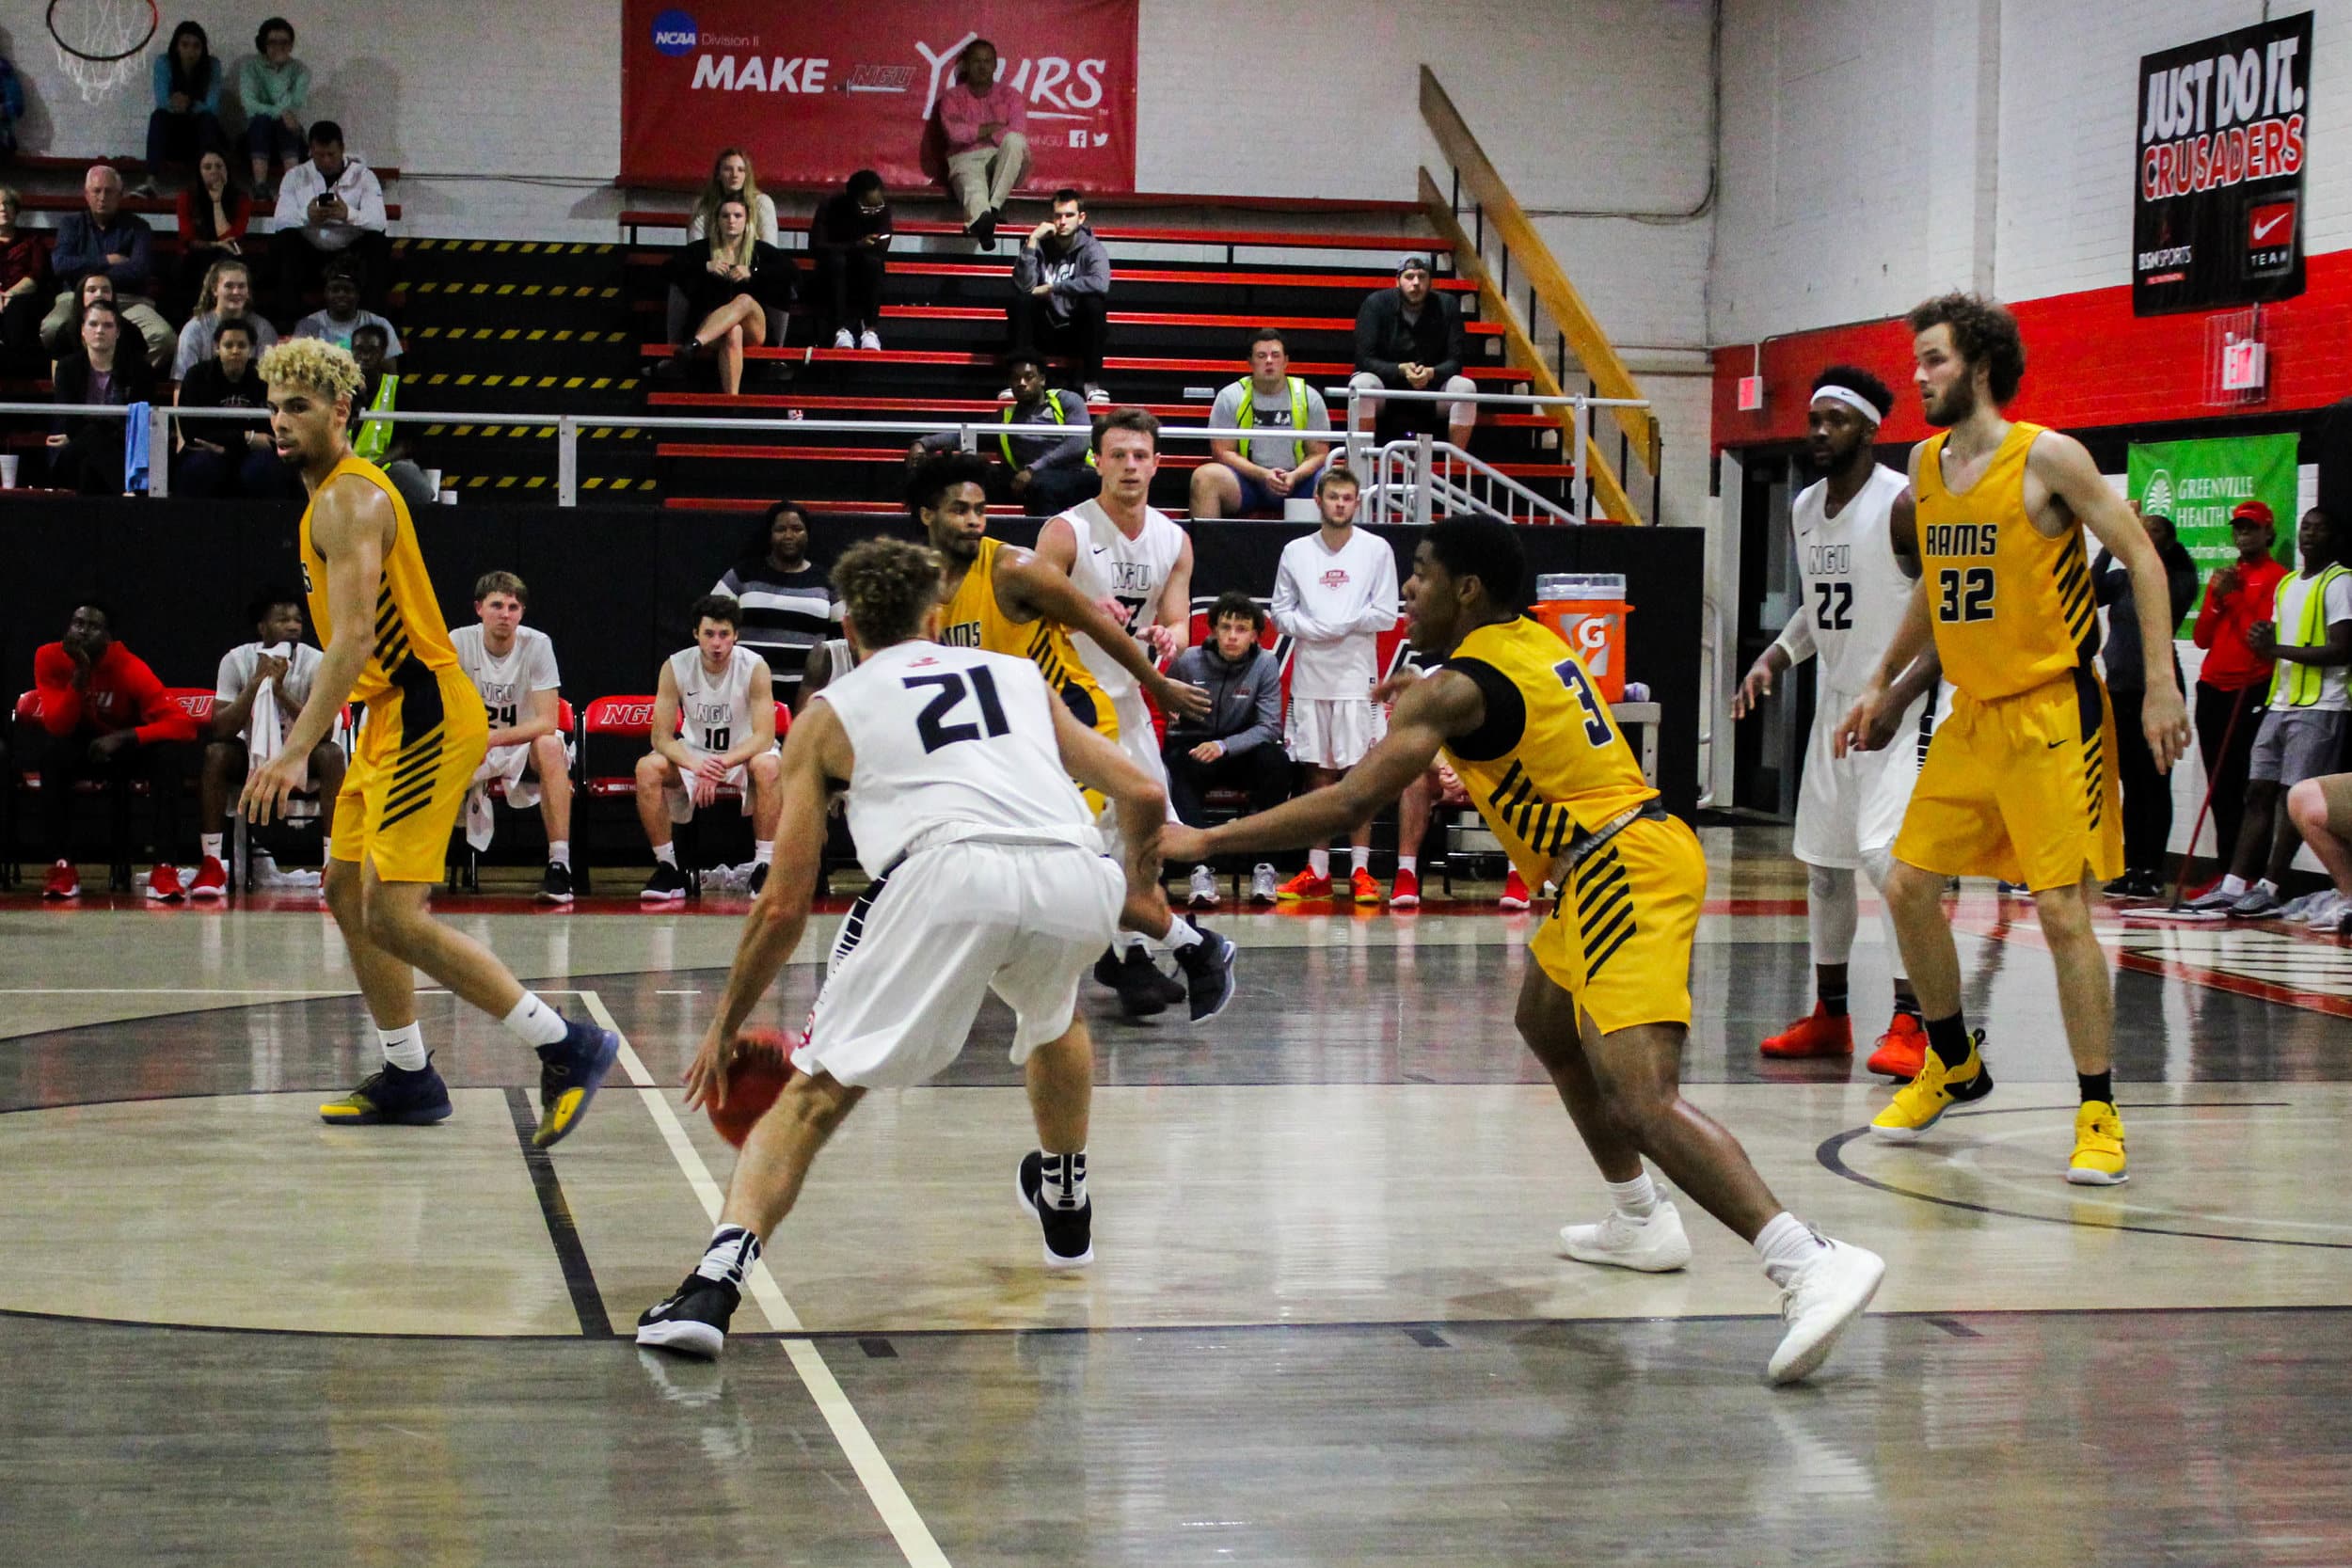 AJ Myers (21), a sophomore guard, dribbles the ball toward the basket.